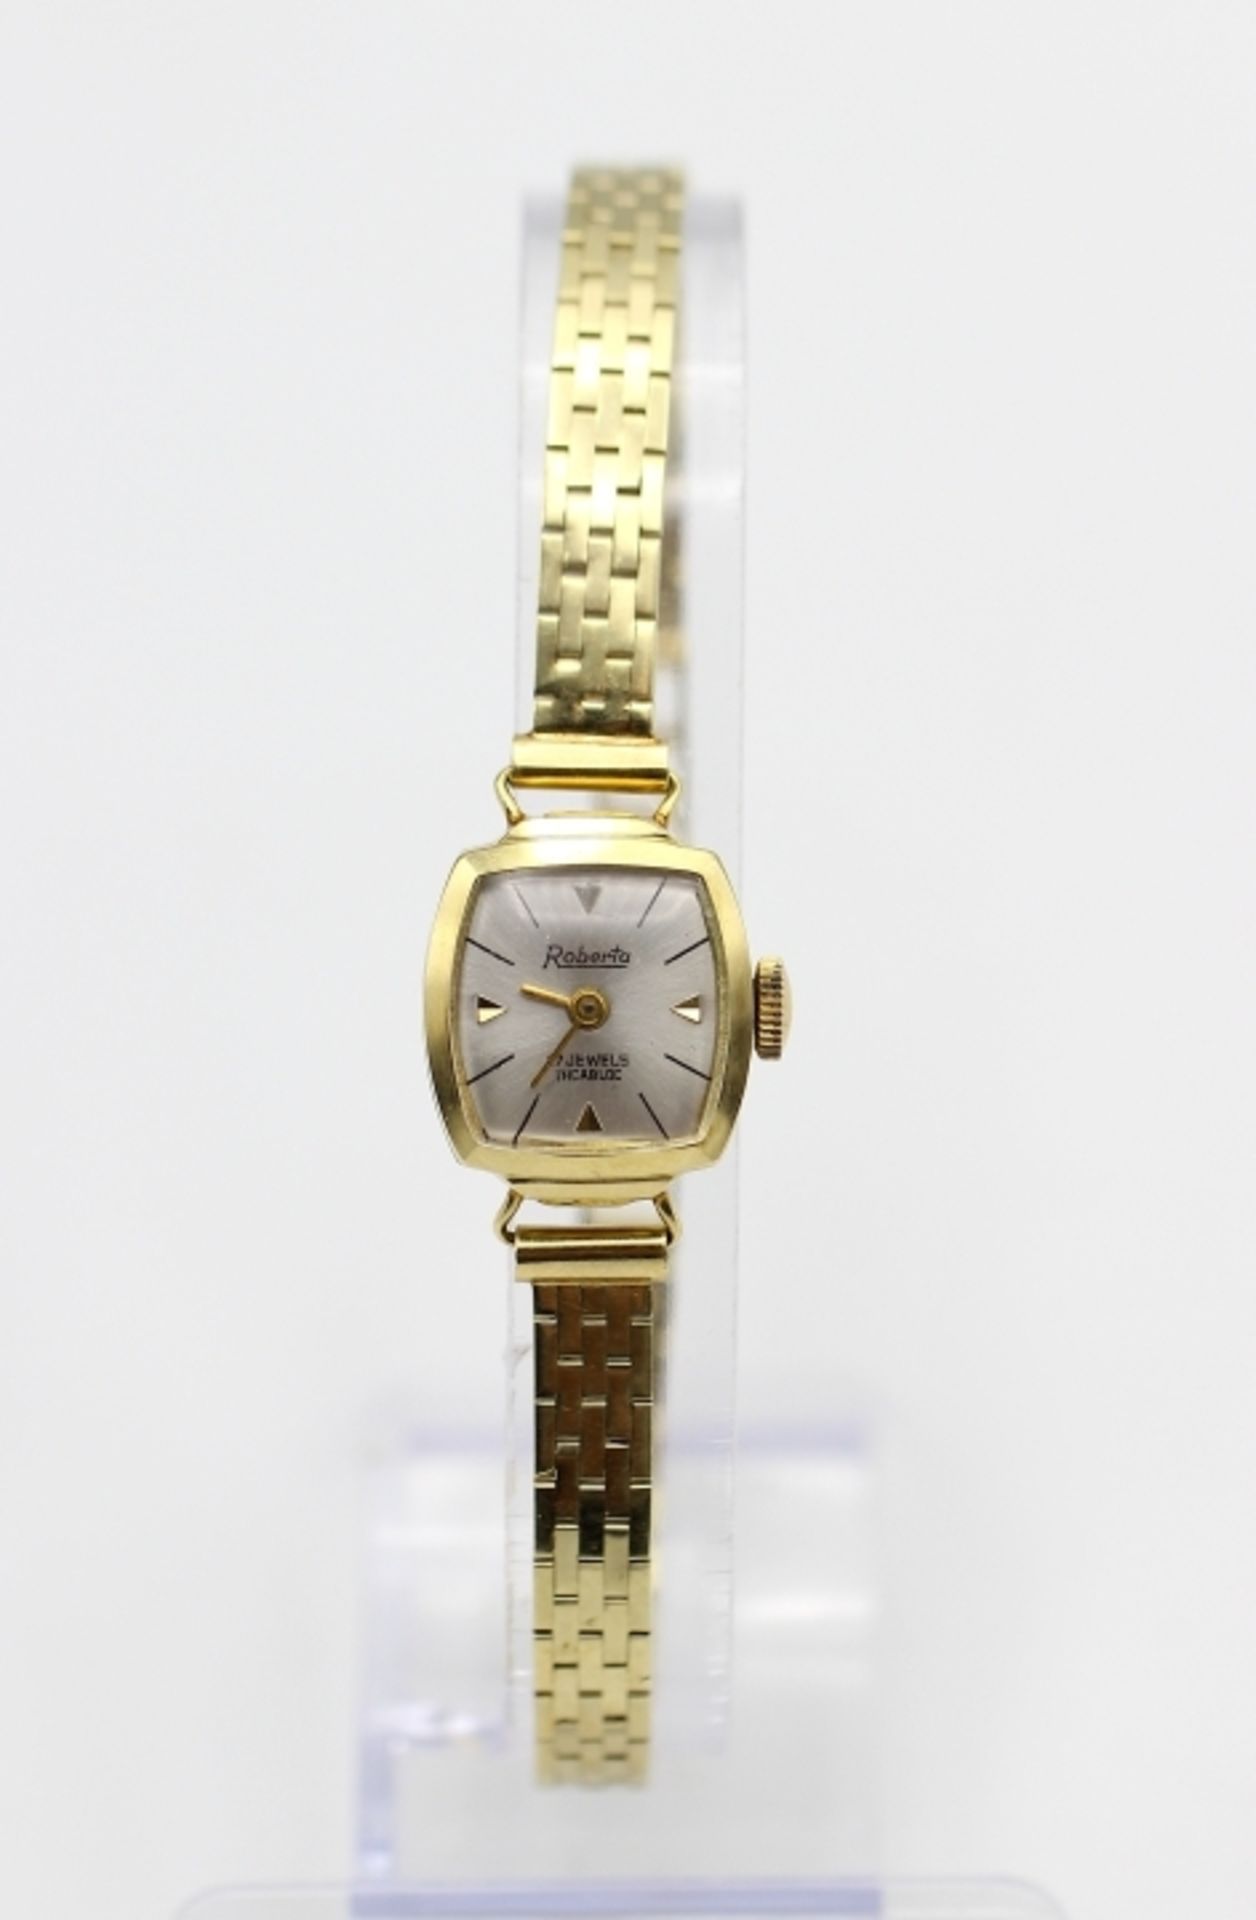 Goldene Armbanduhr - Marke Roberta 17 Jewels, Incabloc, Rückdeckel gest. 14 K, Gold 585,